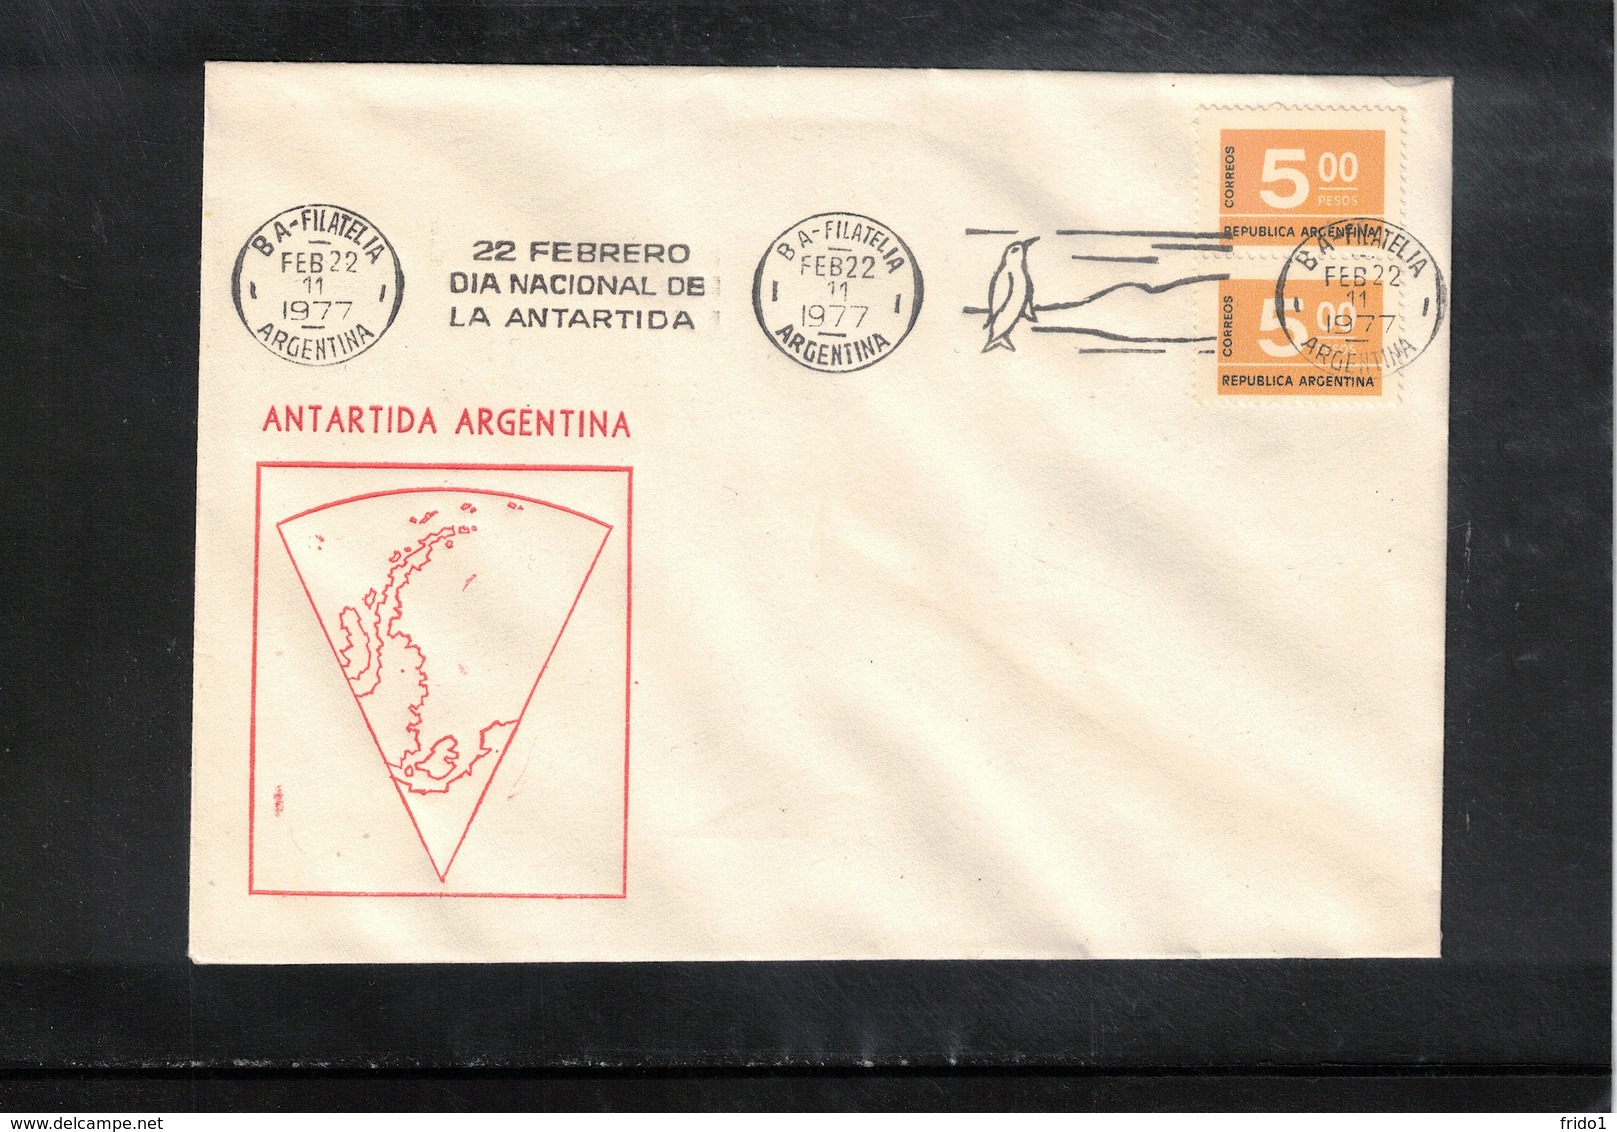 Argentina 1977 Argentinian Antarctica Interesting Cover - Events & Gedenkfeiern